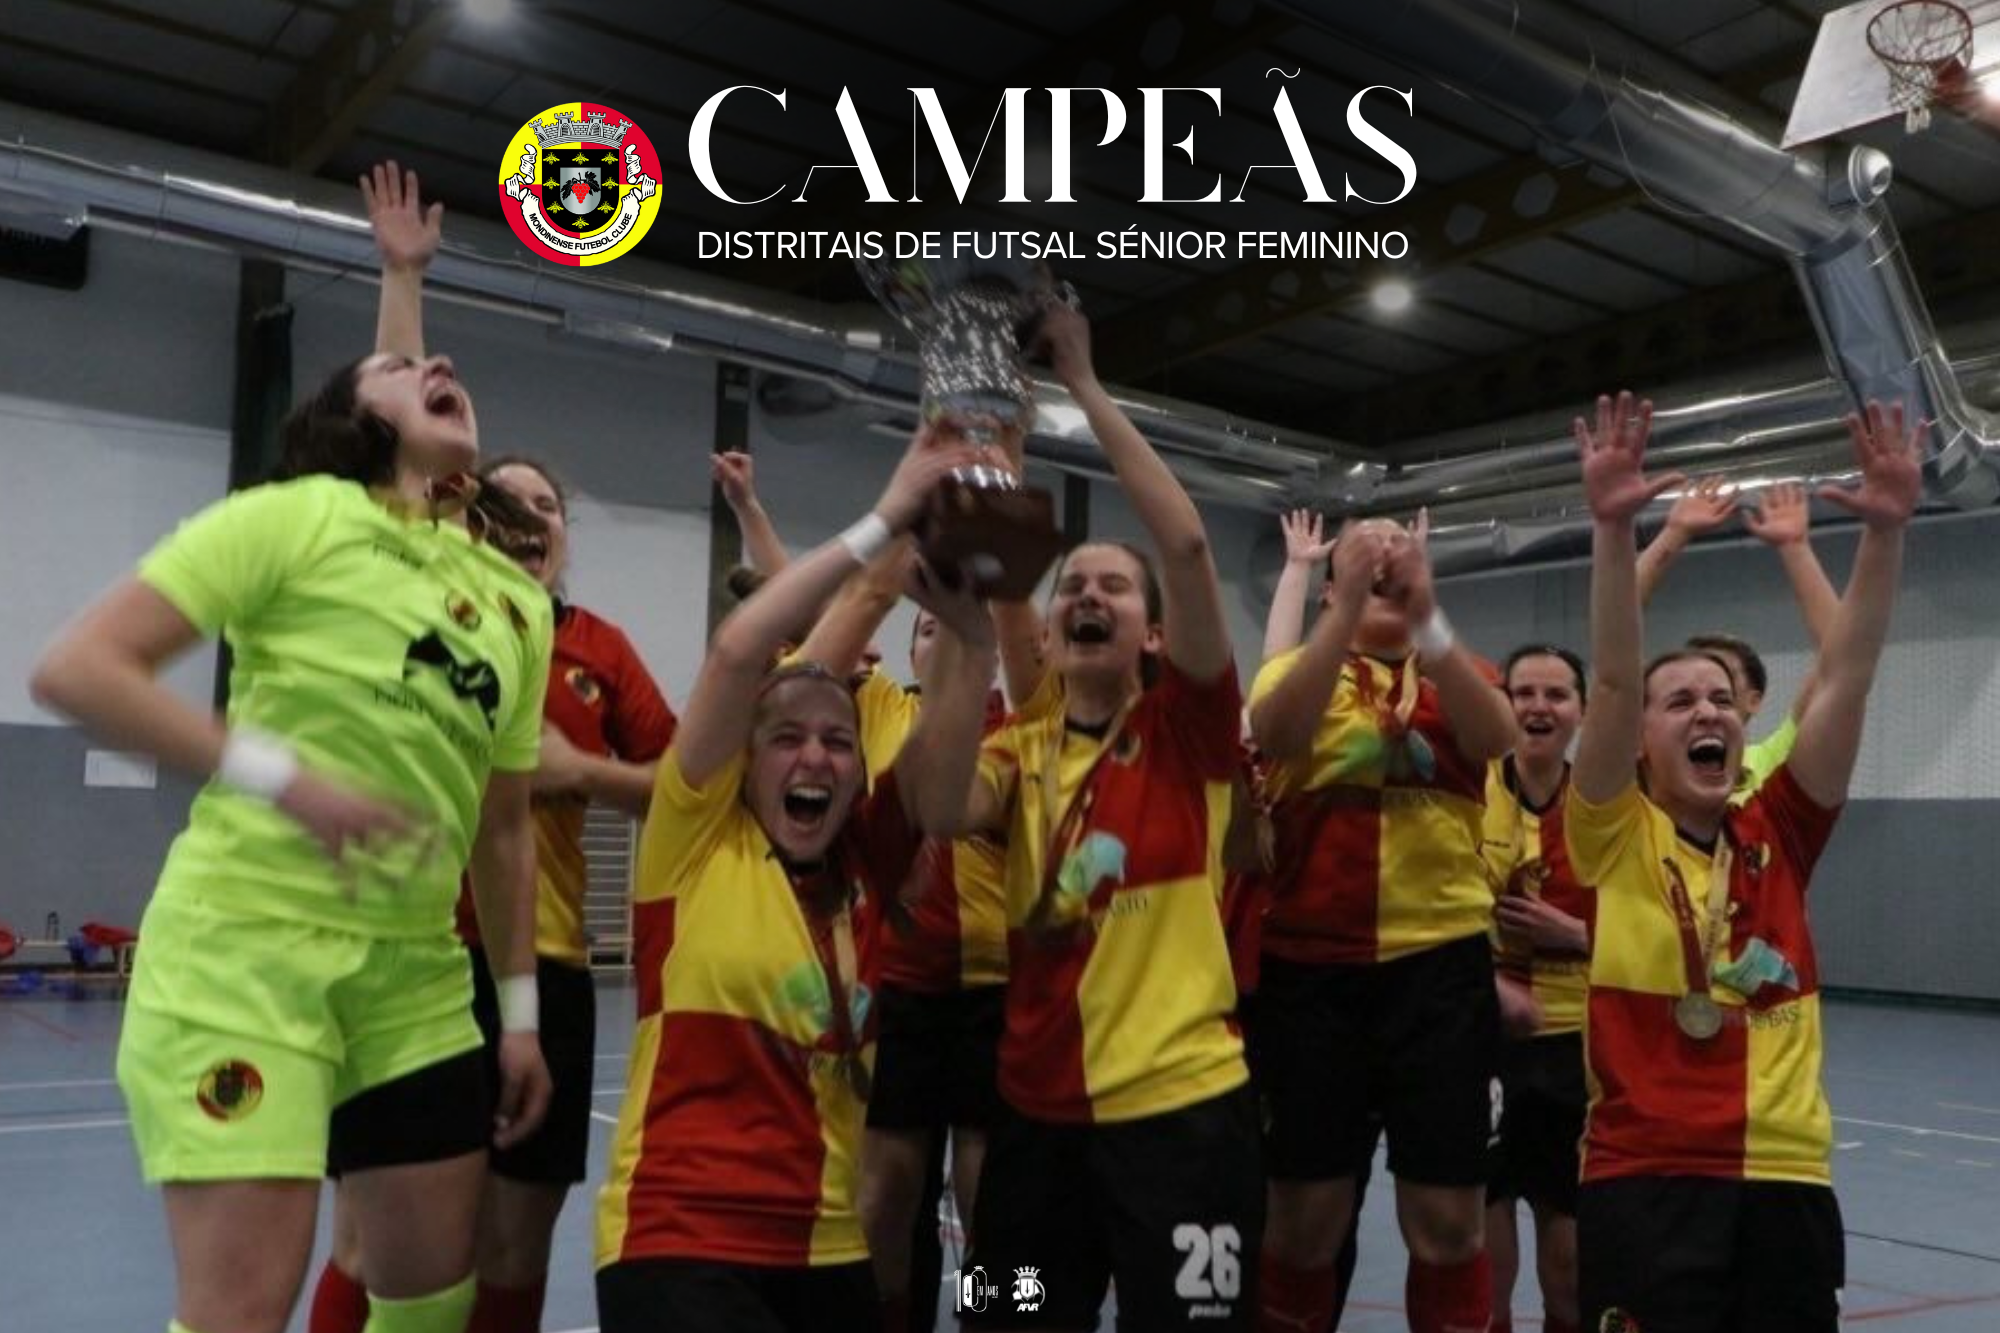 Campeãs Distritais de Futsal Sénior Feminino 2023/2024